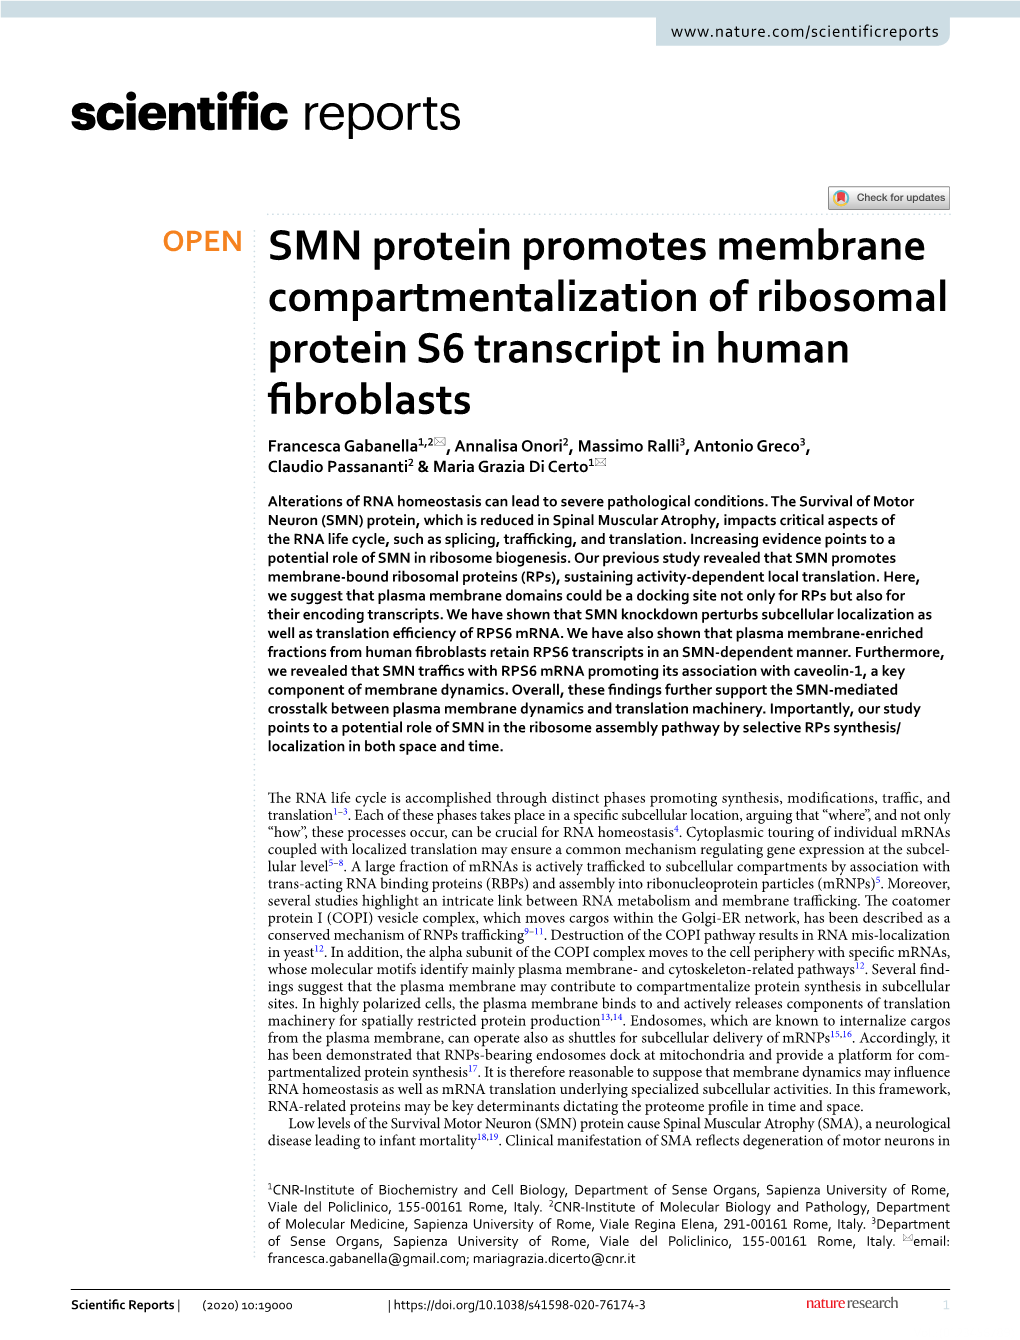 SMN Protein Promotes Membrane Compartmentalization of Ribosomal